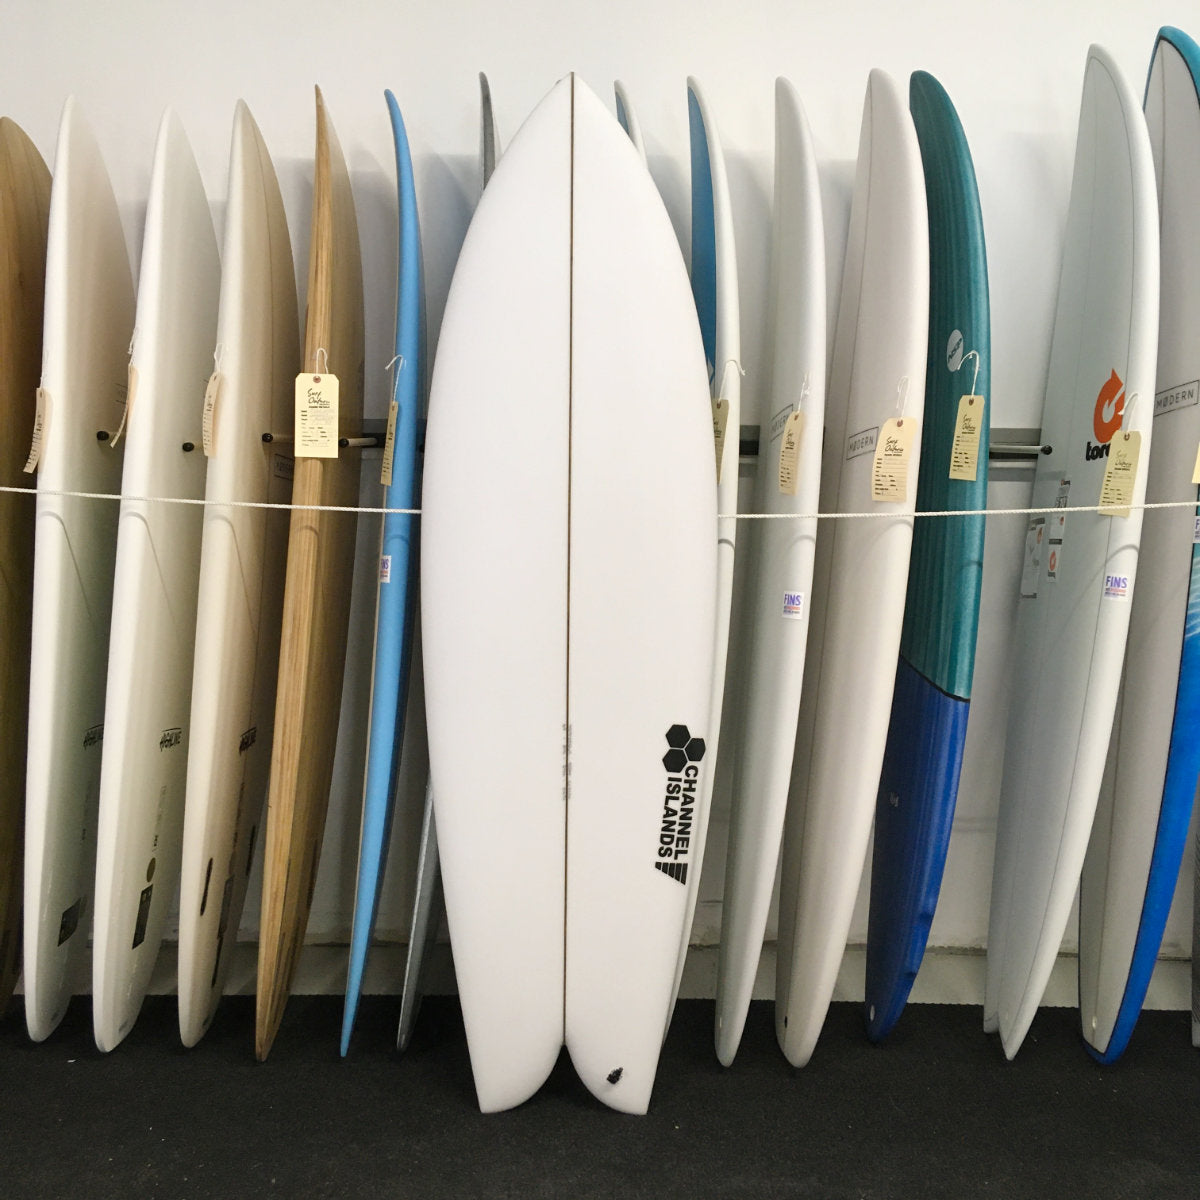 Channel Islands Surfboards – Surf Ontario